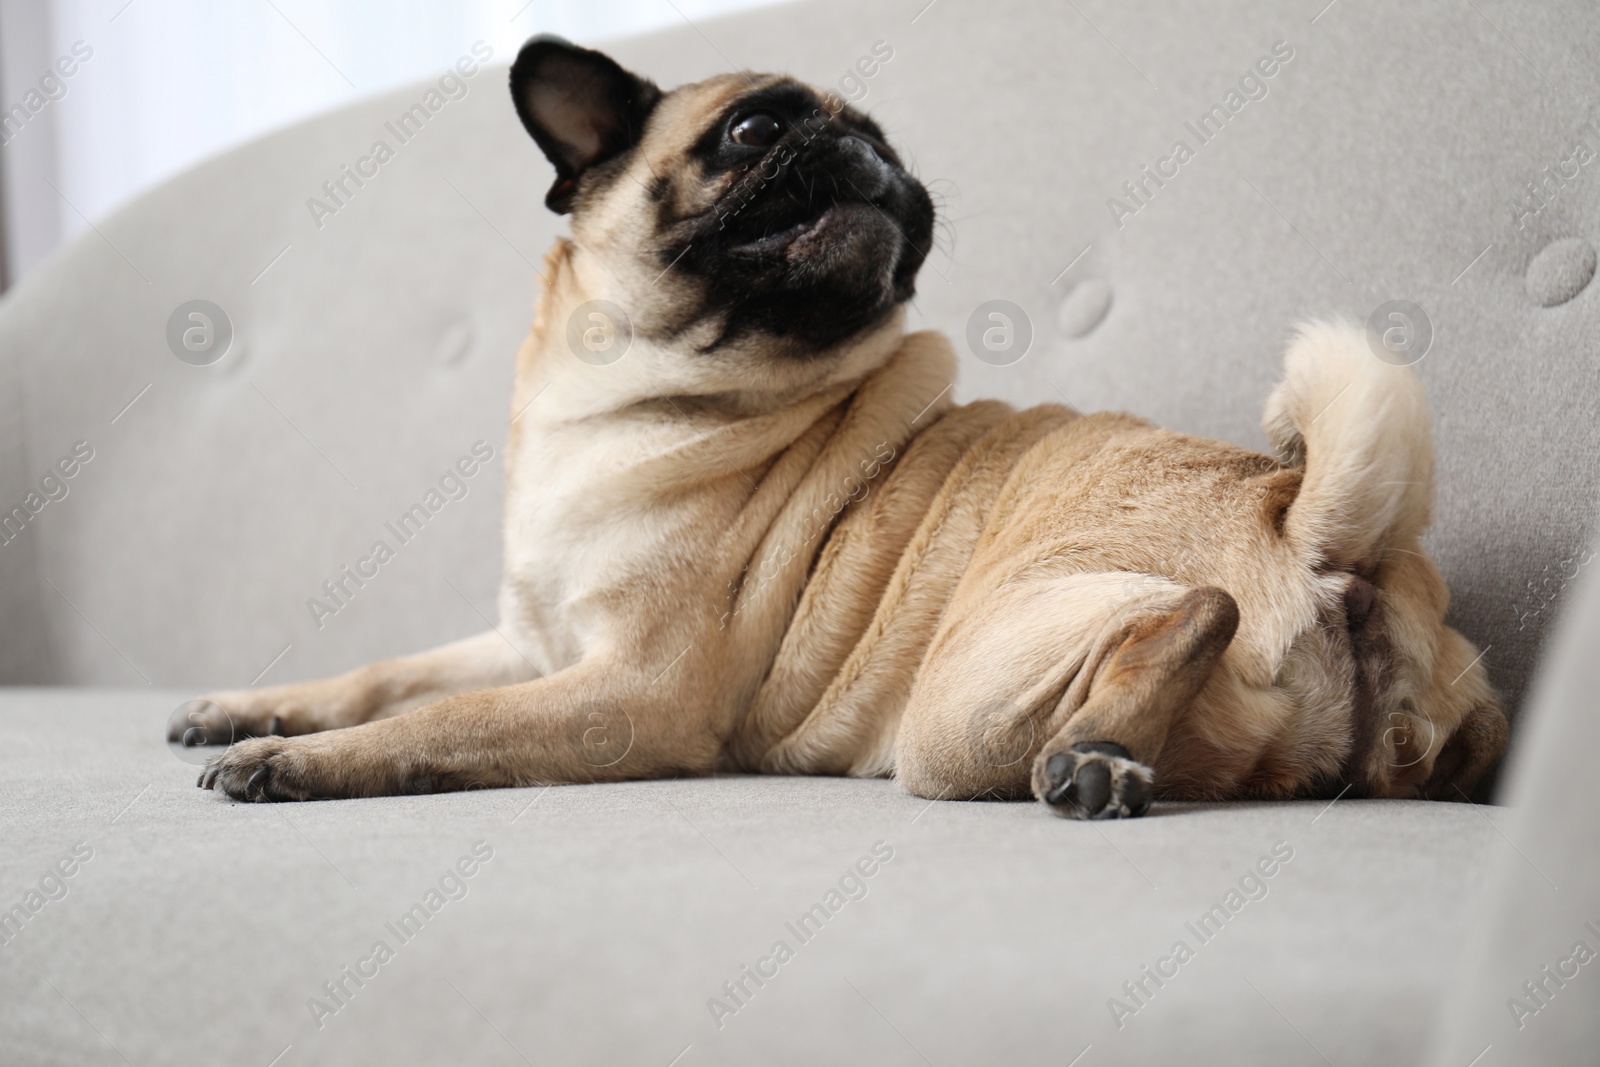 Photo of Happy cute pug dog on sofa indoors